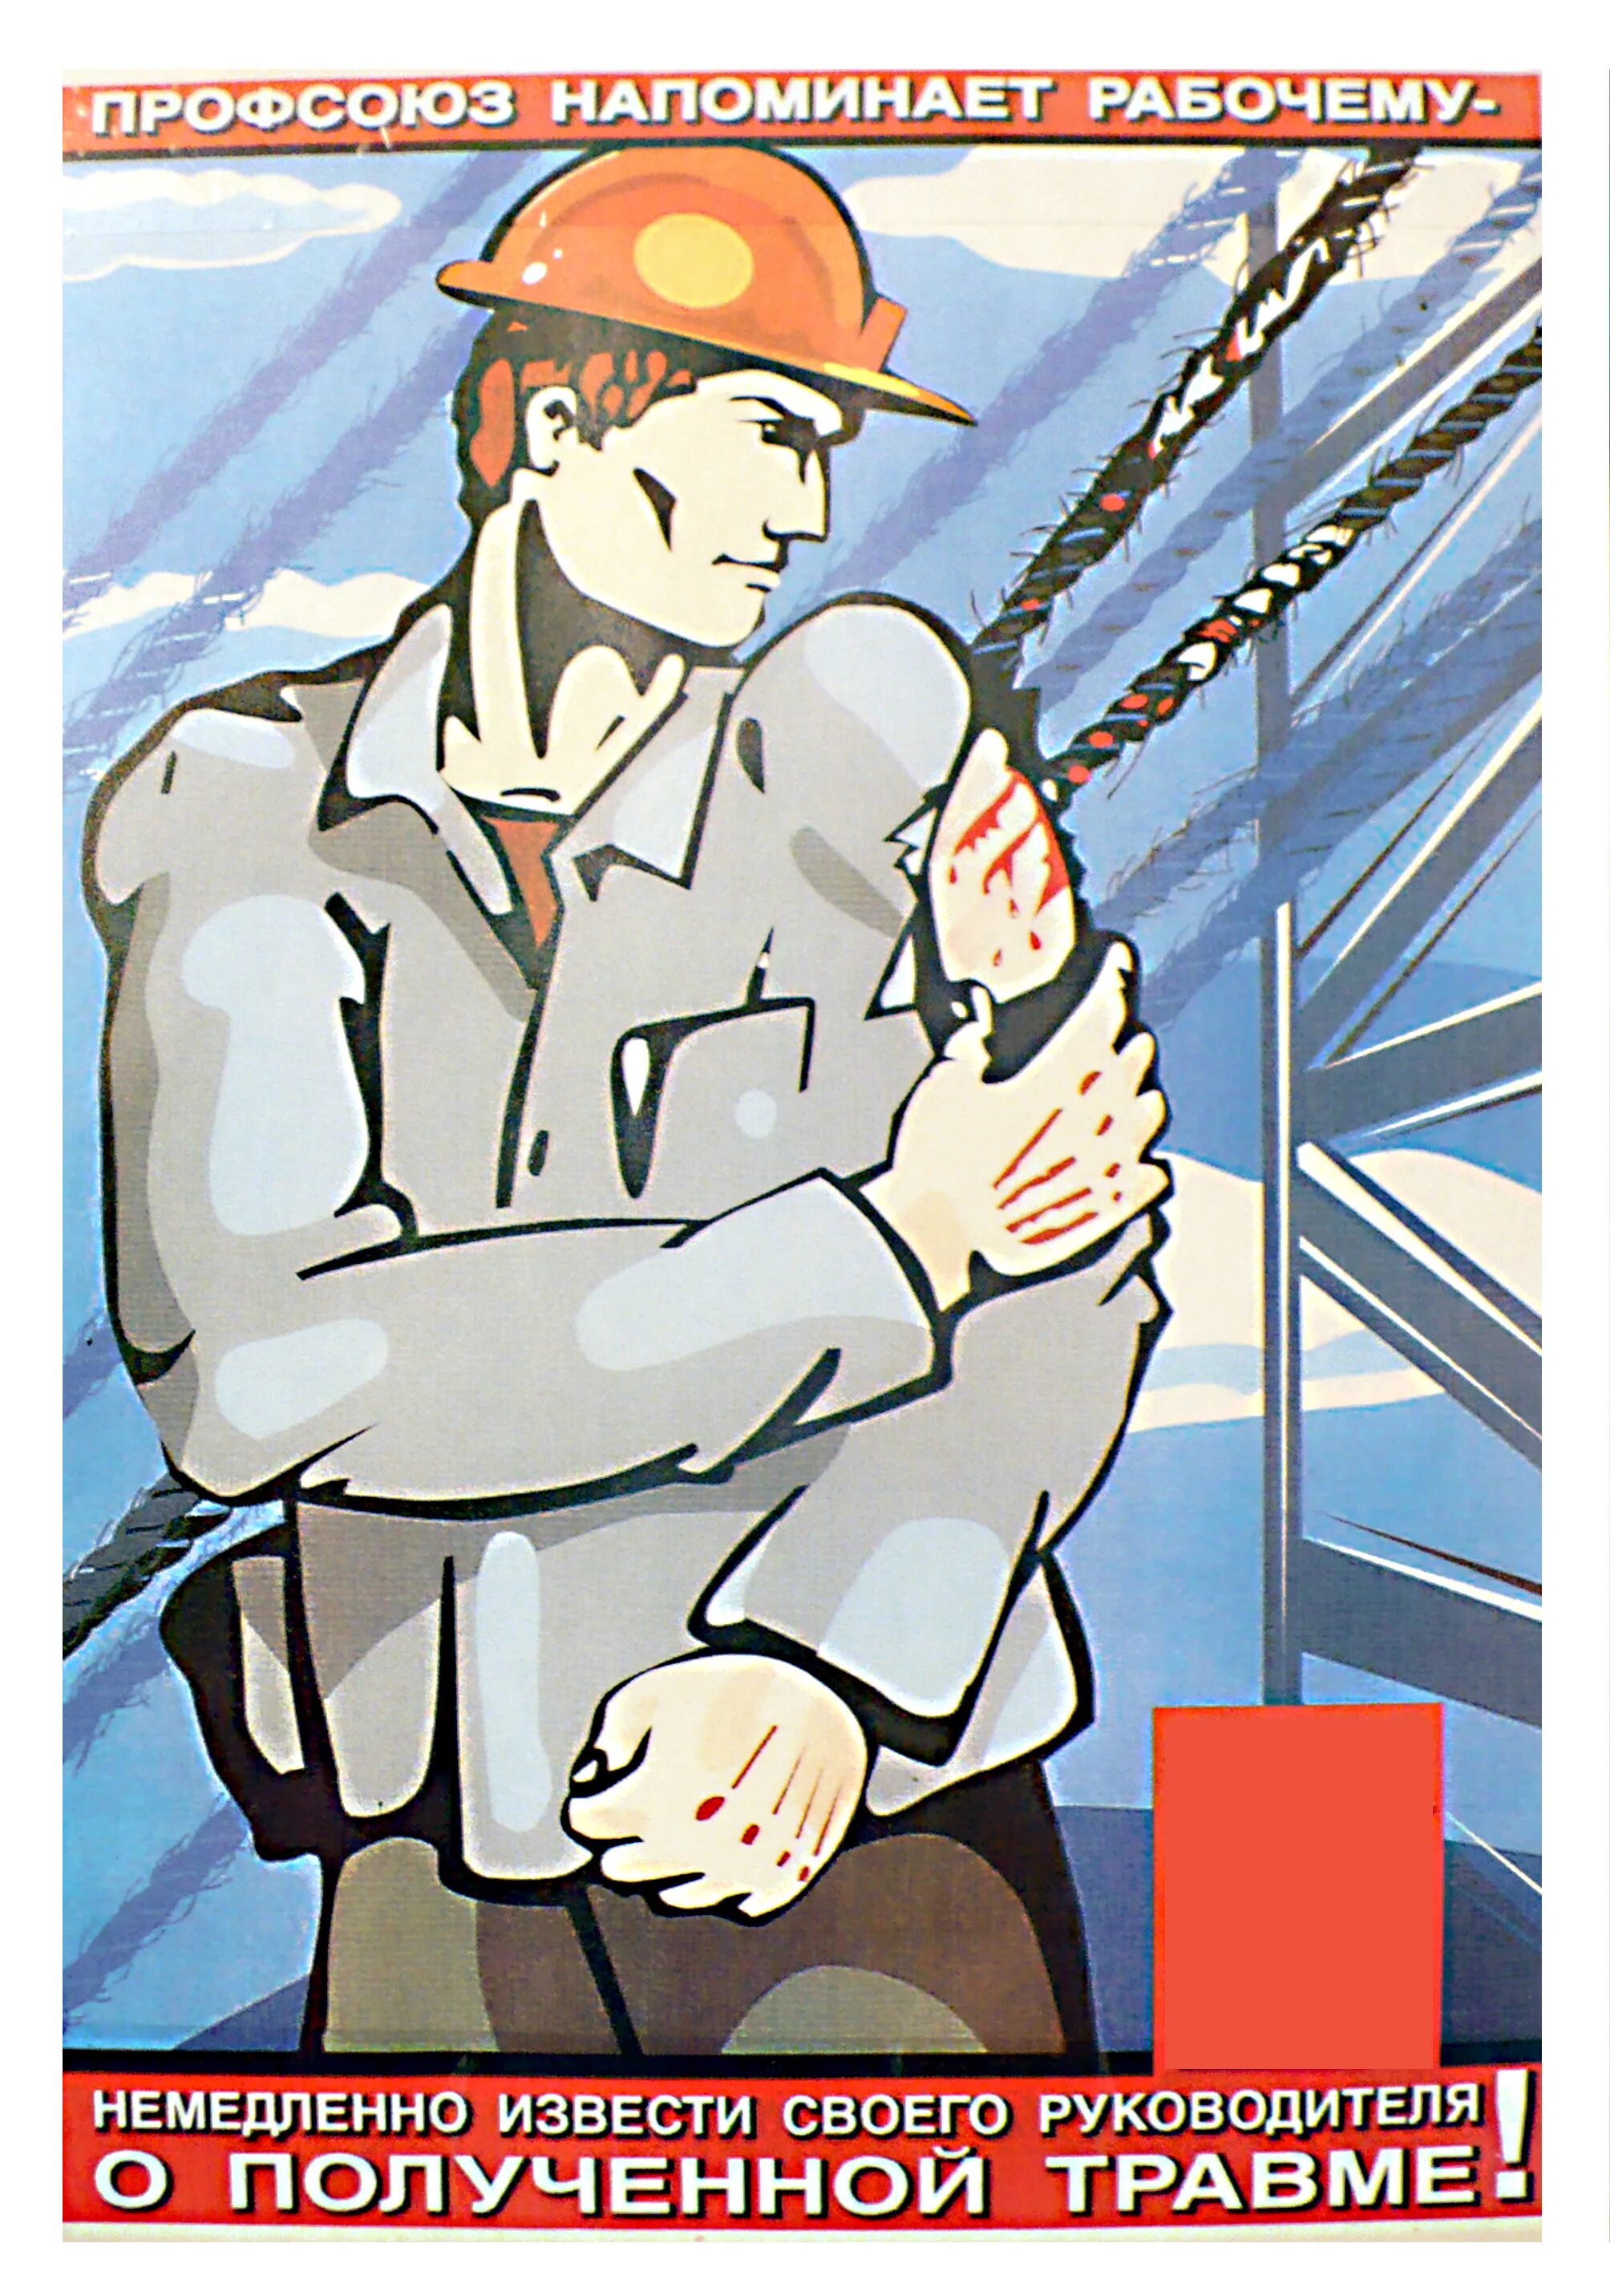 Инженер по обеспечению безопасности. Охрана труда. Плакаты по технике безопасности. Техника безопасности на производстве. Советские плакаты о безопасности труда.